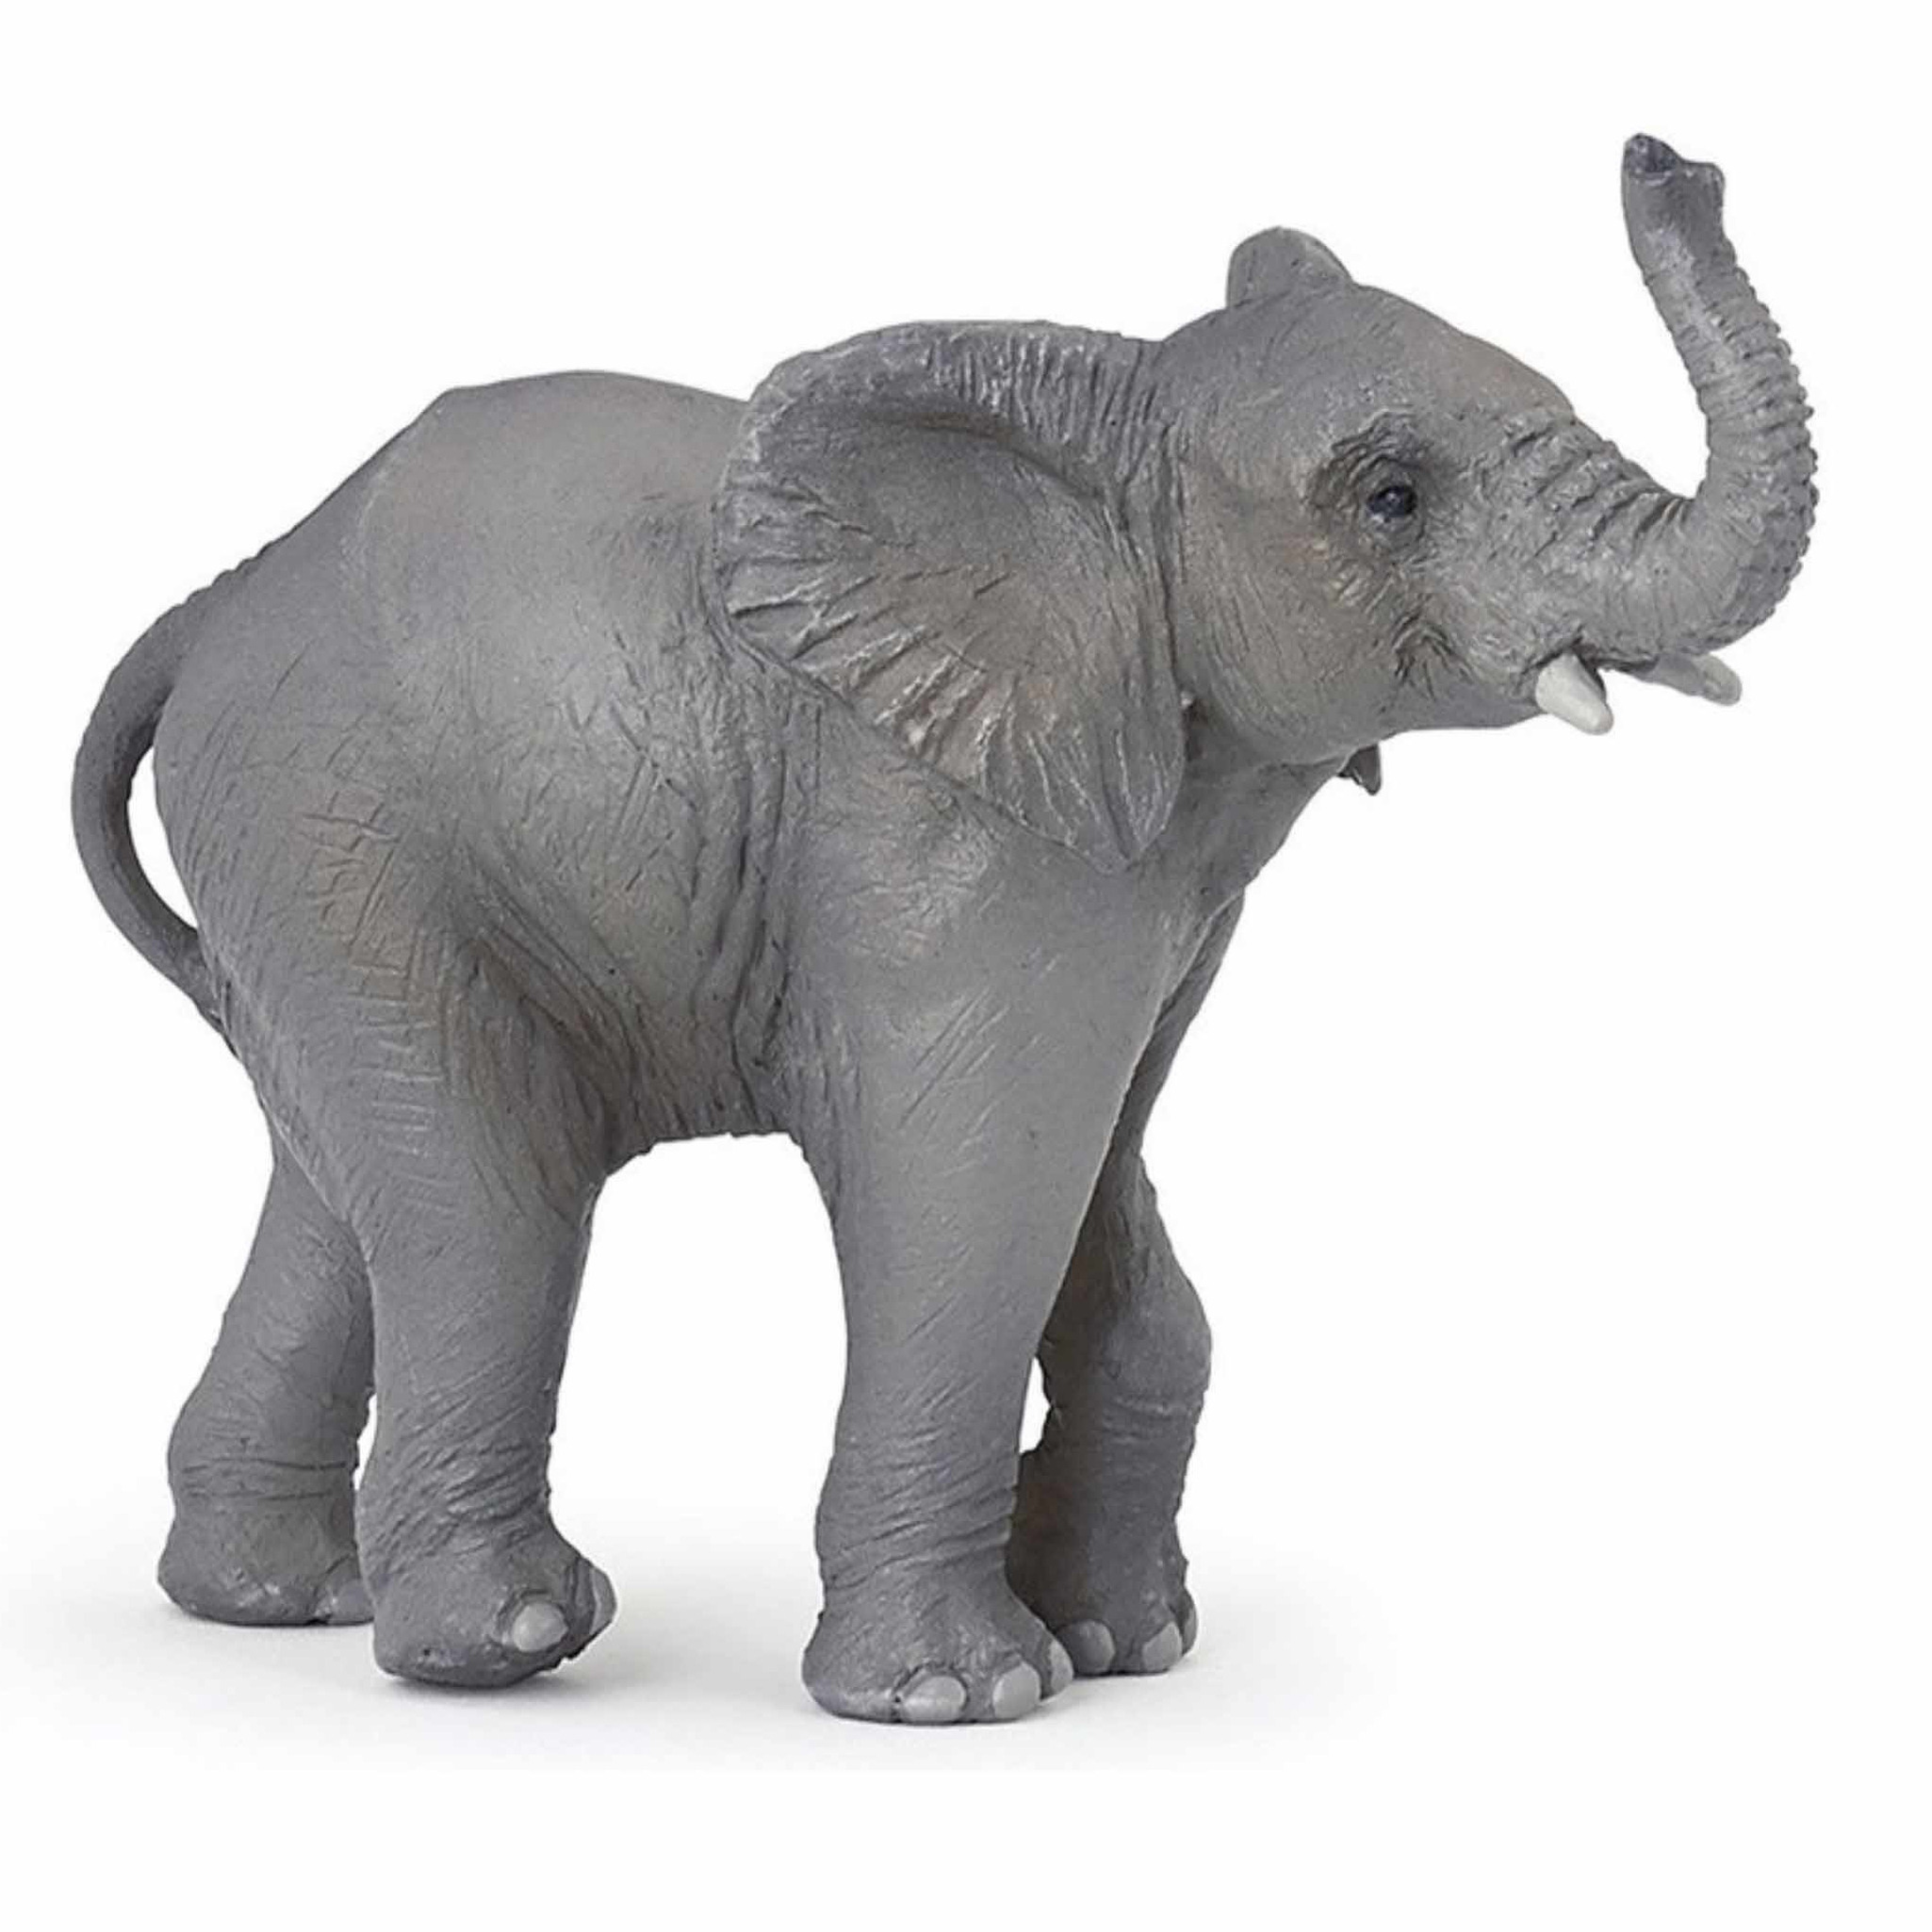 Plastic speelgoed olifant kalfje 10 cm